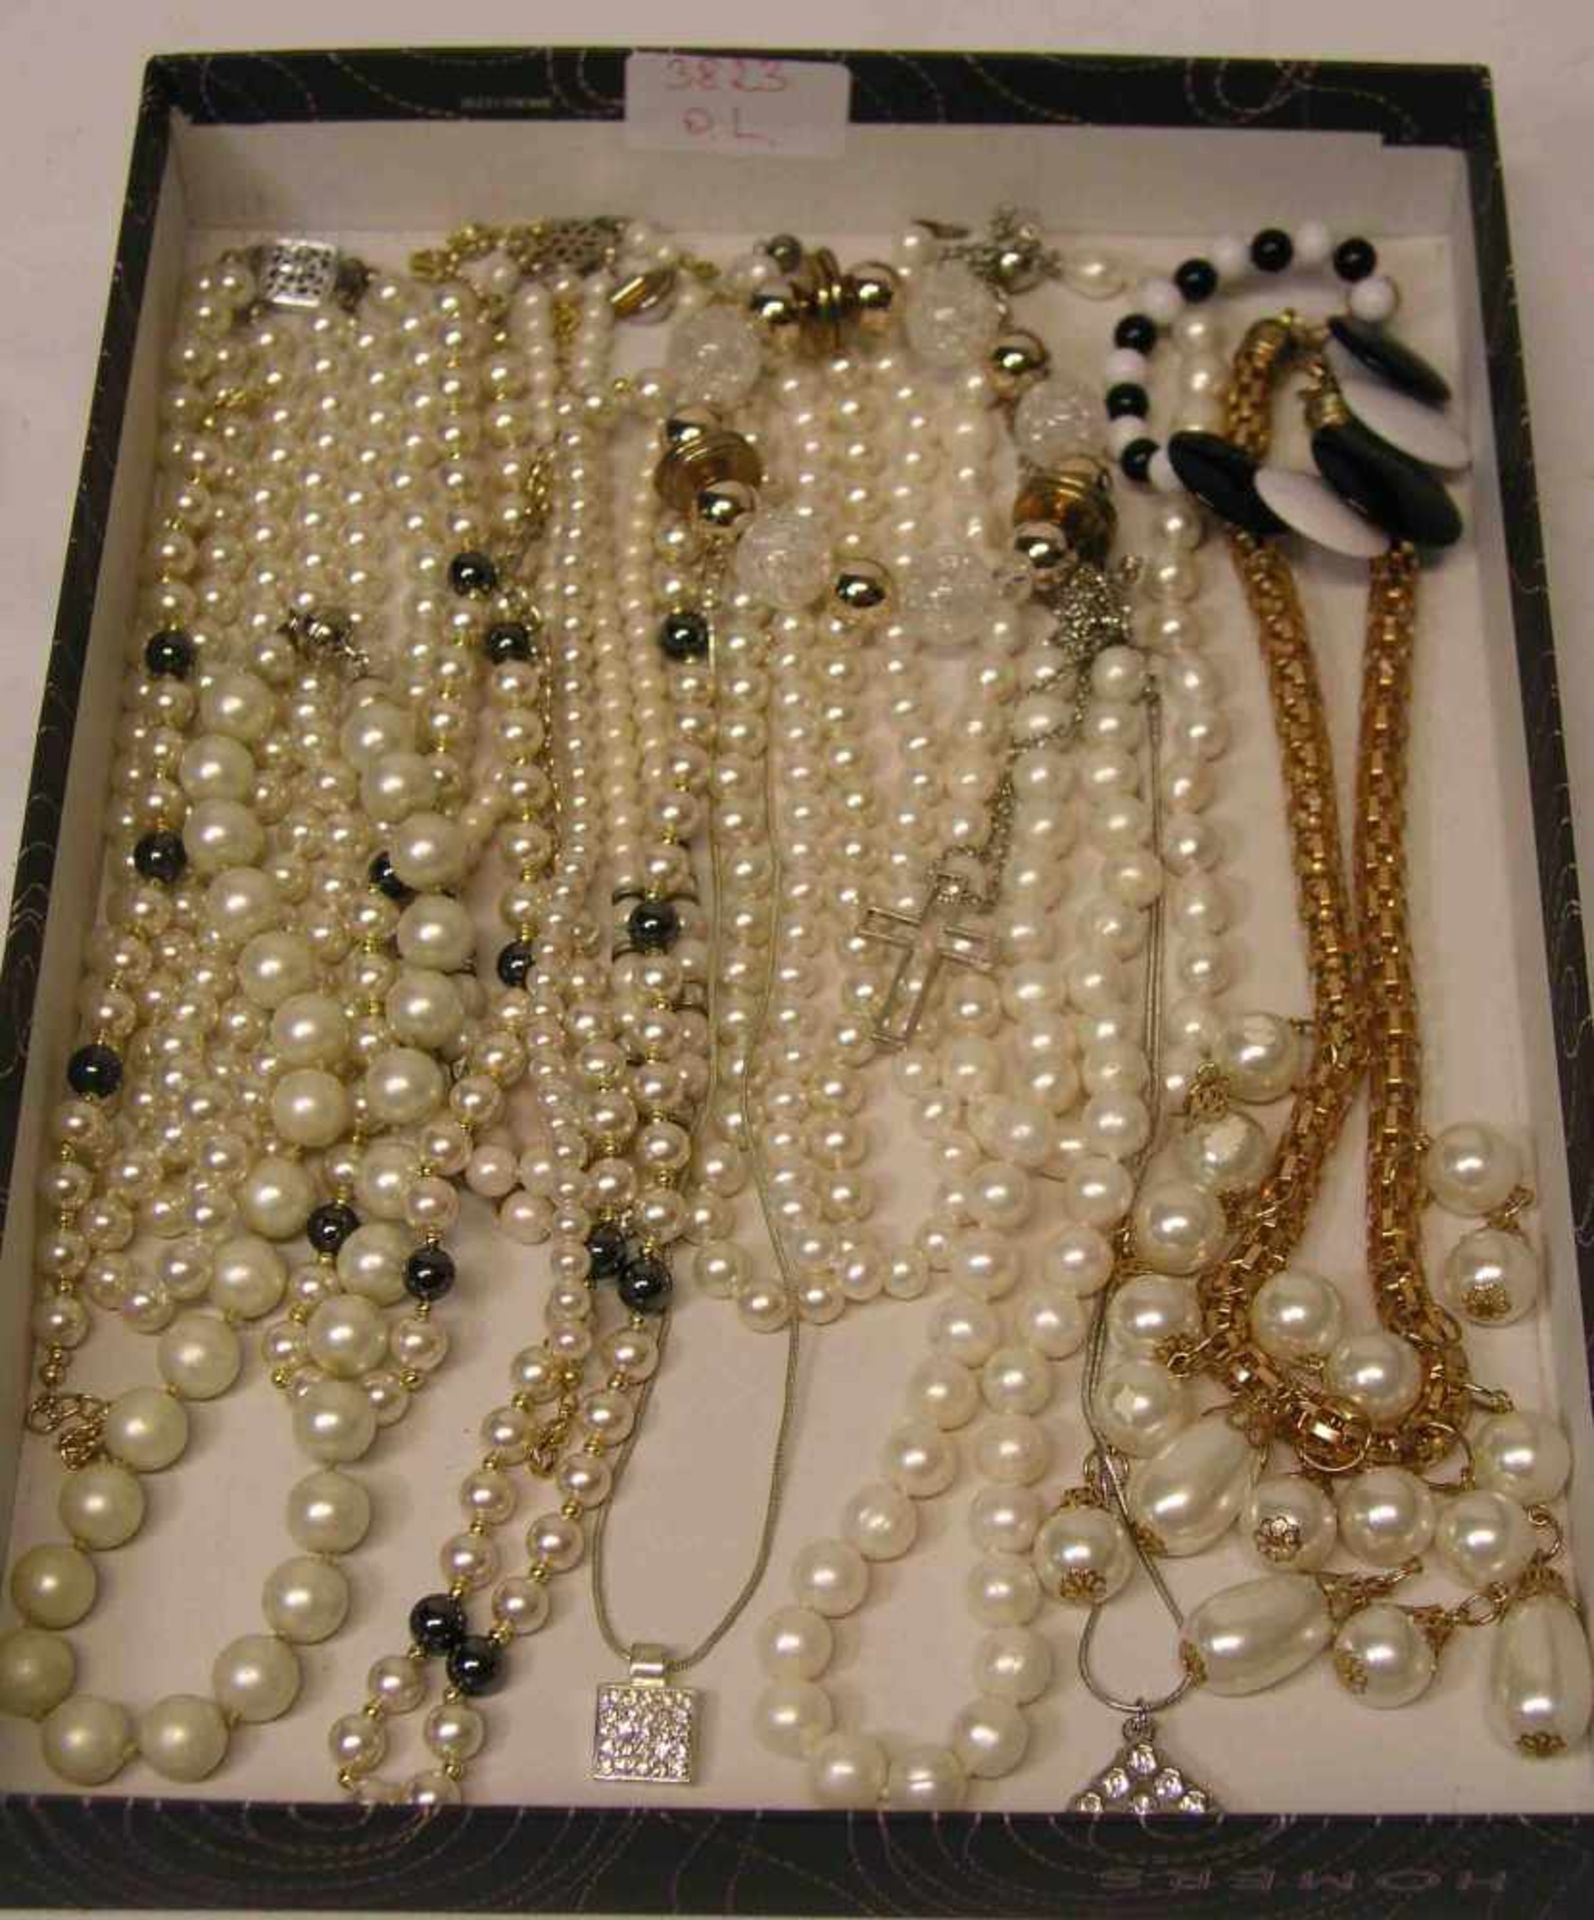 Posten Modeschmuck. Vorwiegend Perlenketten.